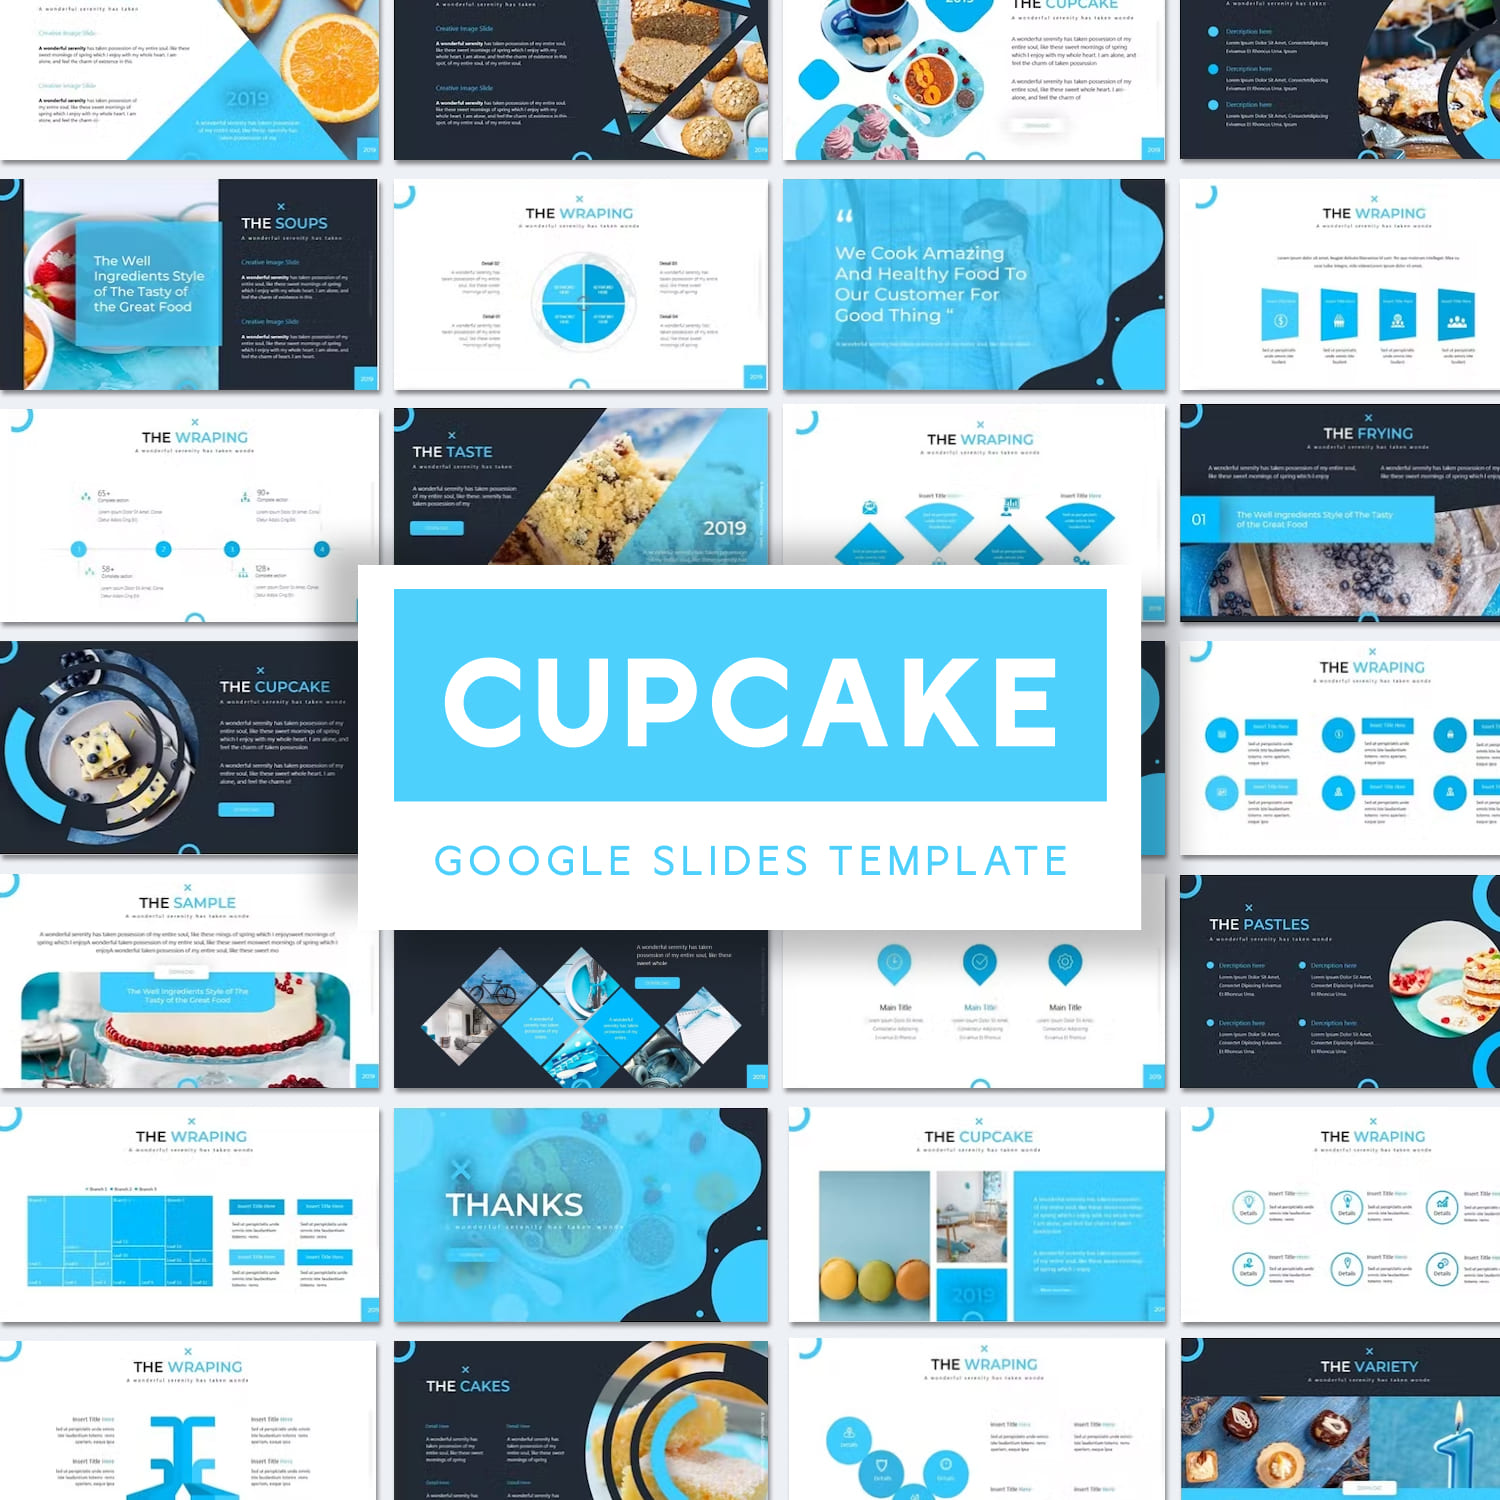 Cupcake | Google Slides Template.